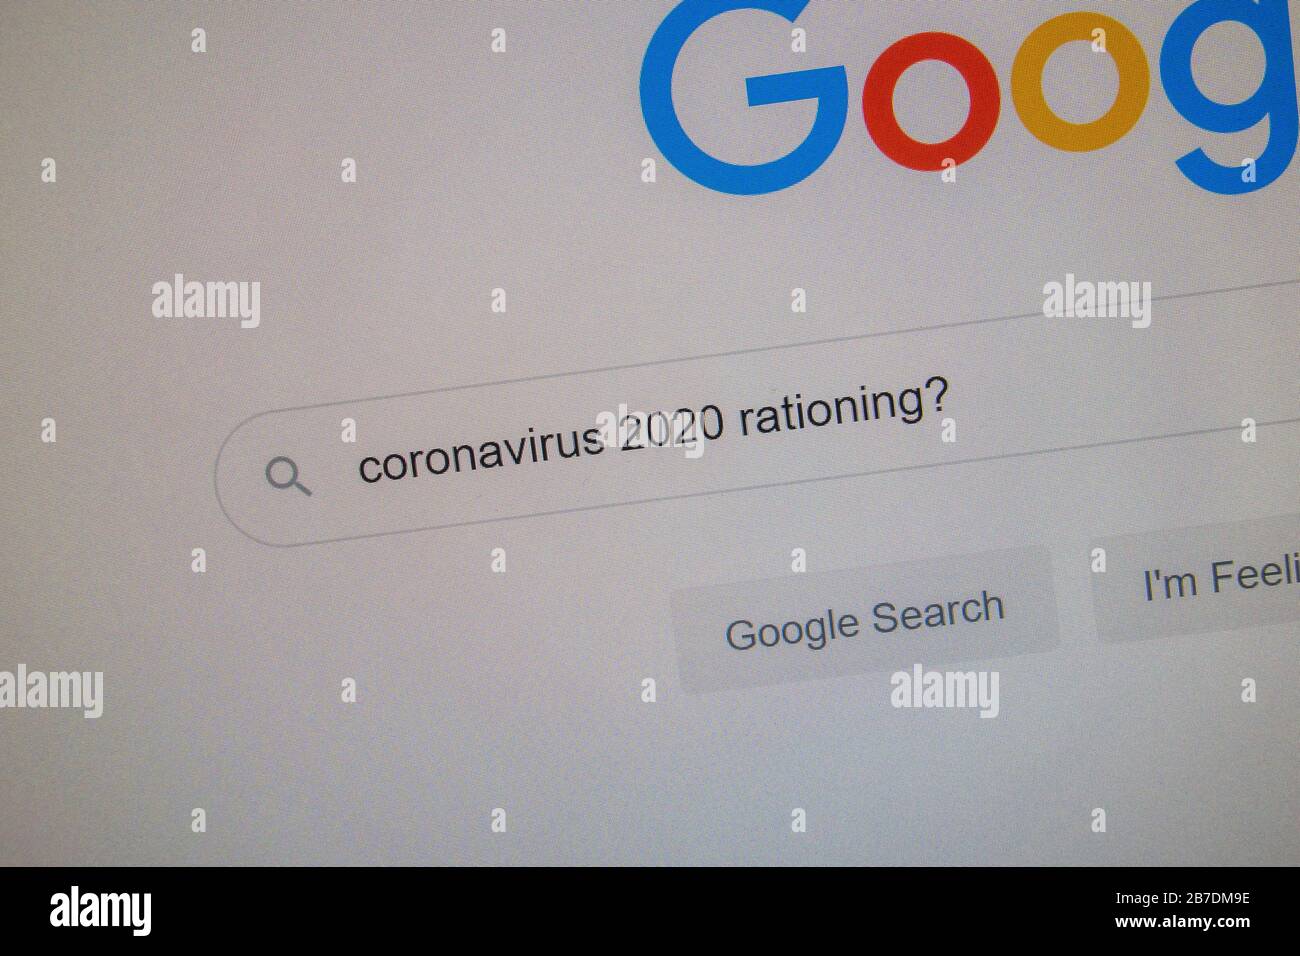 Google search 'coronavirus 2020 rationing?' Stock Photo